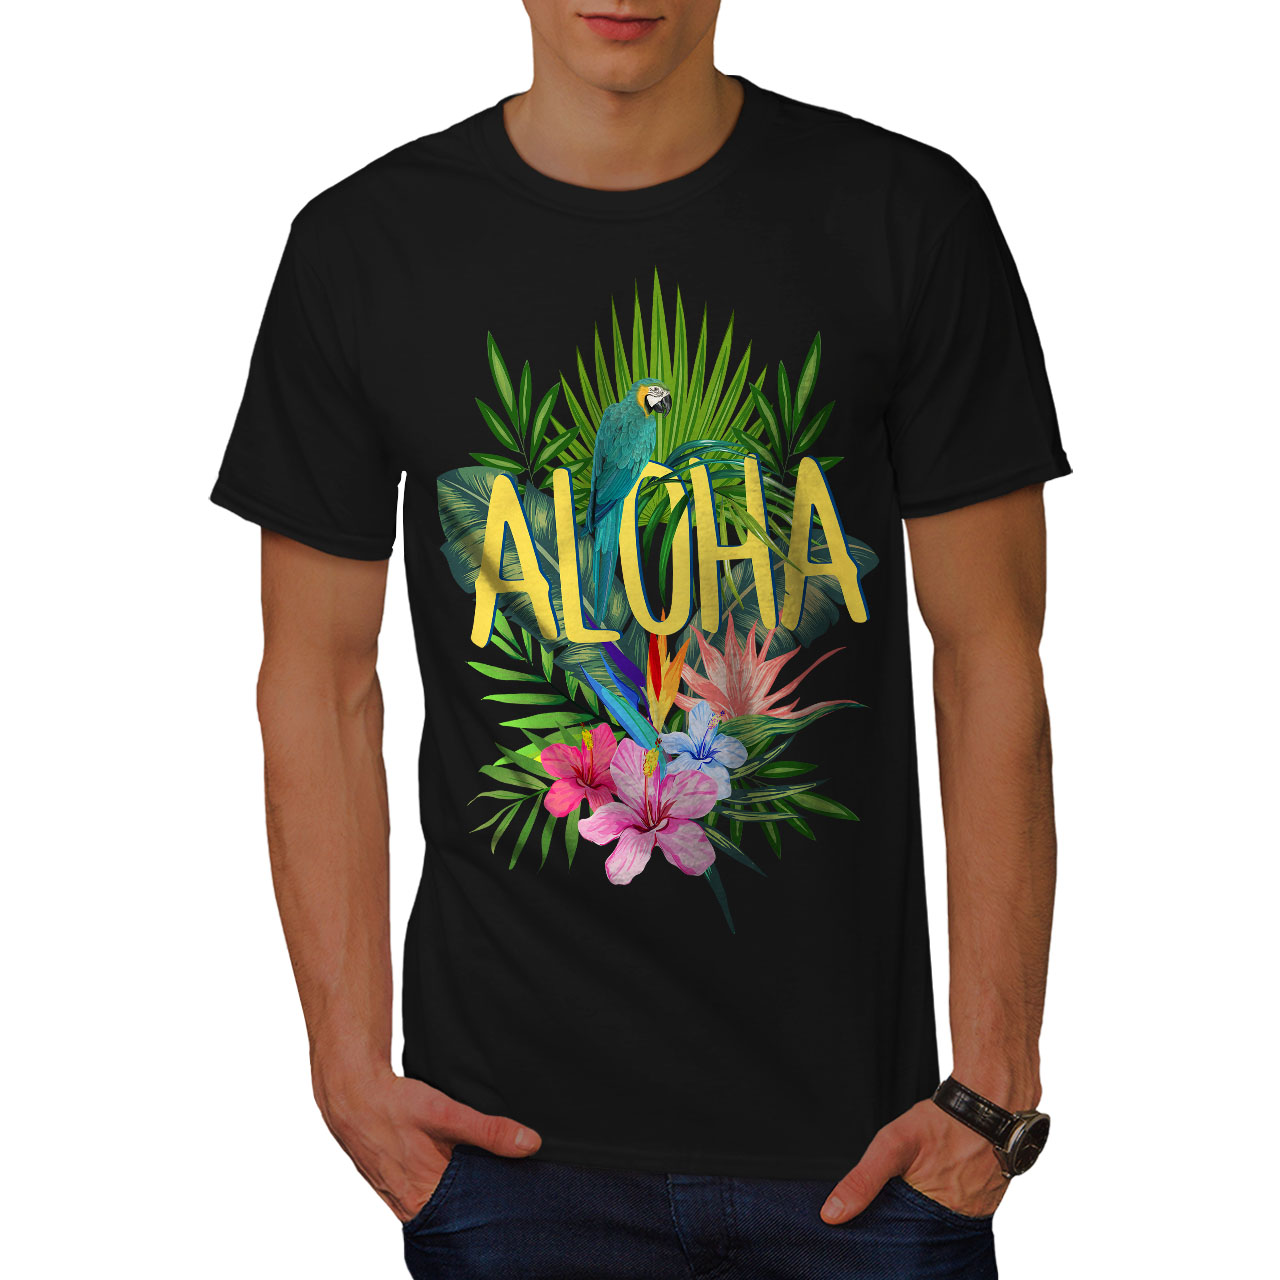 Wellcoda Hawaii Aloha Parrot Mens T-shirt, Mood Graphic Design Printed ...